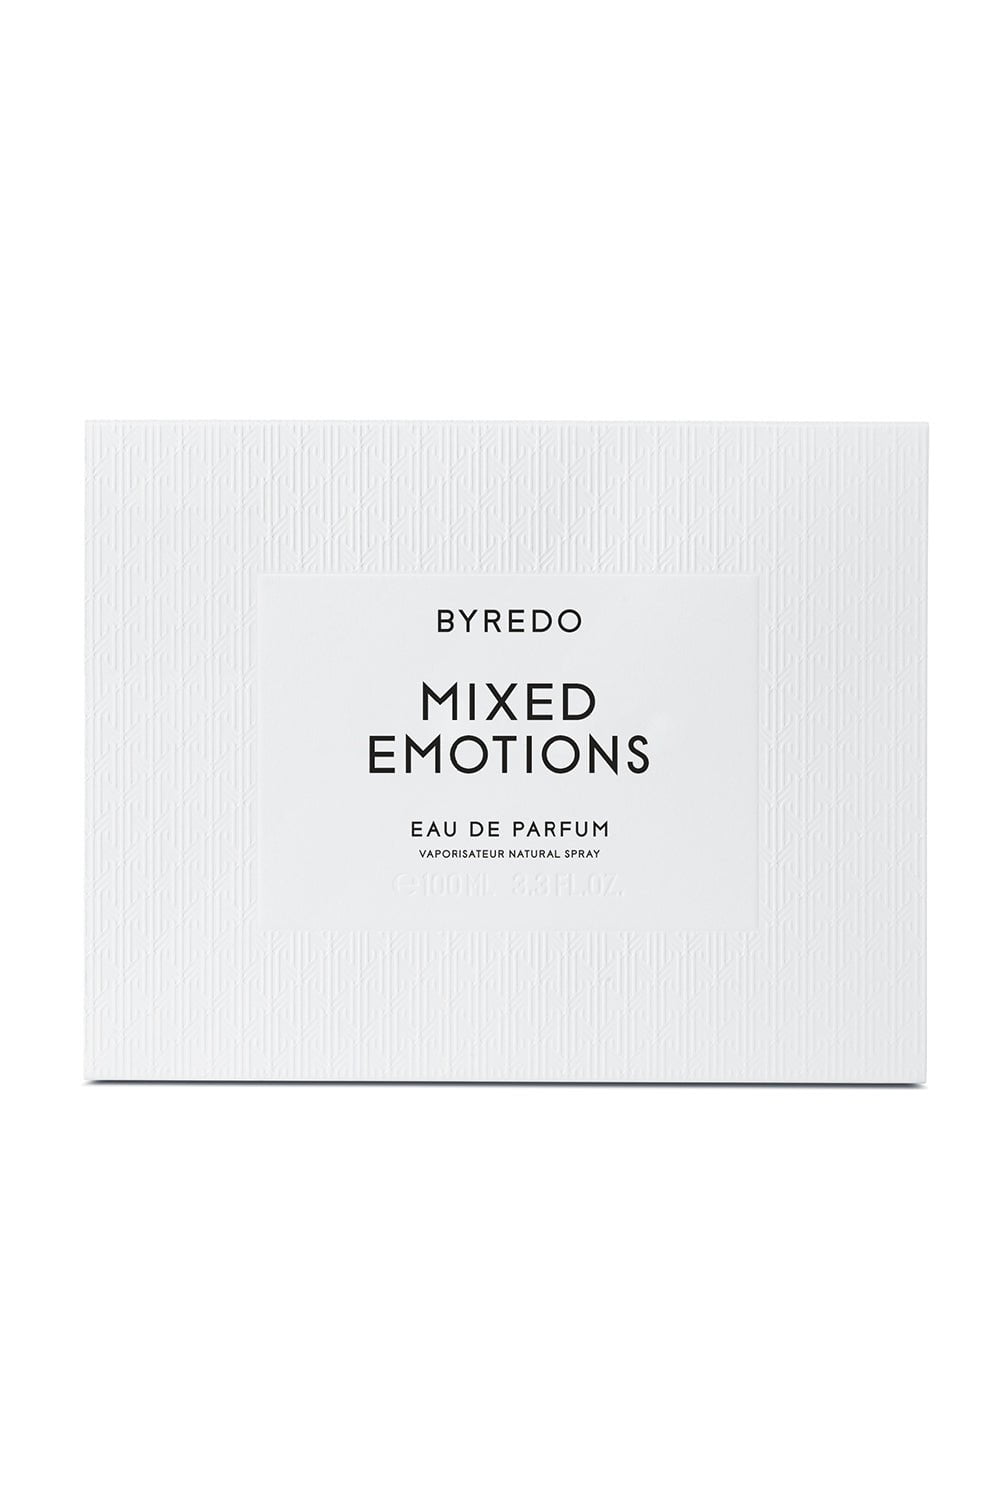 BYREDO-Mixed Emotions - 50ml-MIXED EMOTIONS